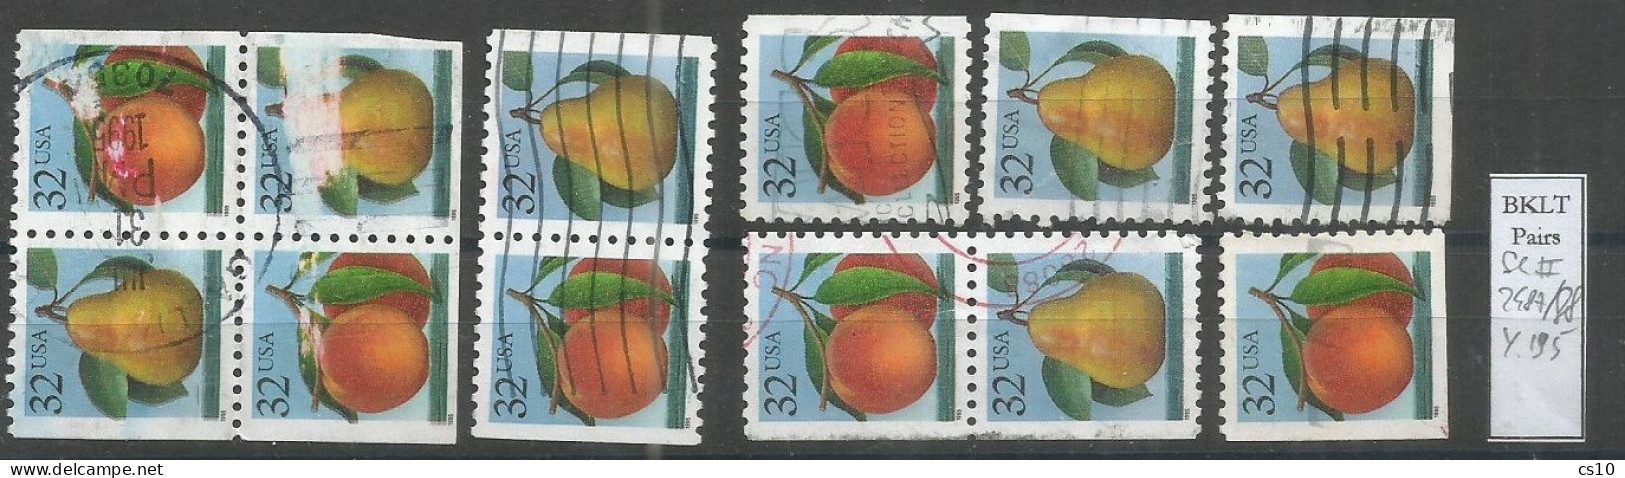 USA 1995 Peach & Pear C.32 SC.# 2487/88 Cpl Issue L/R On 2/3 Sides + BKLT Pair & Part Of Pane - 1981-...